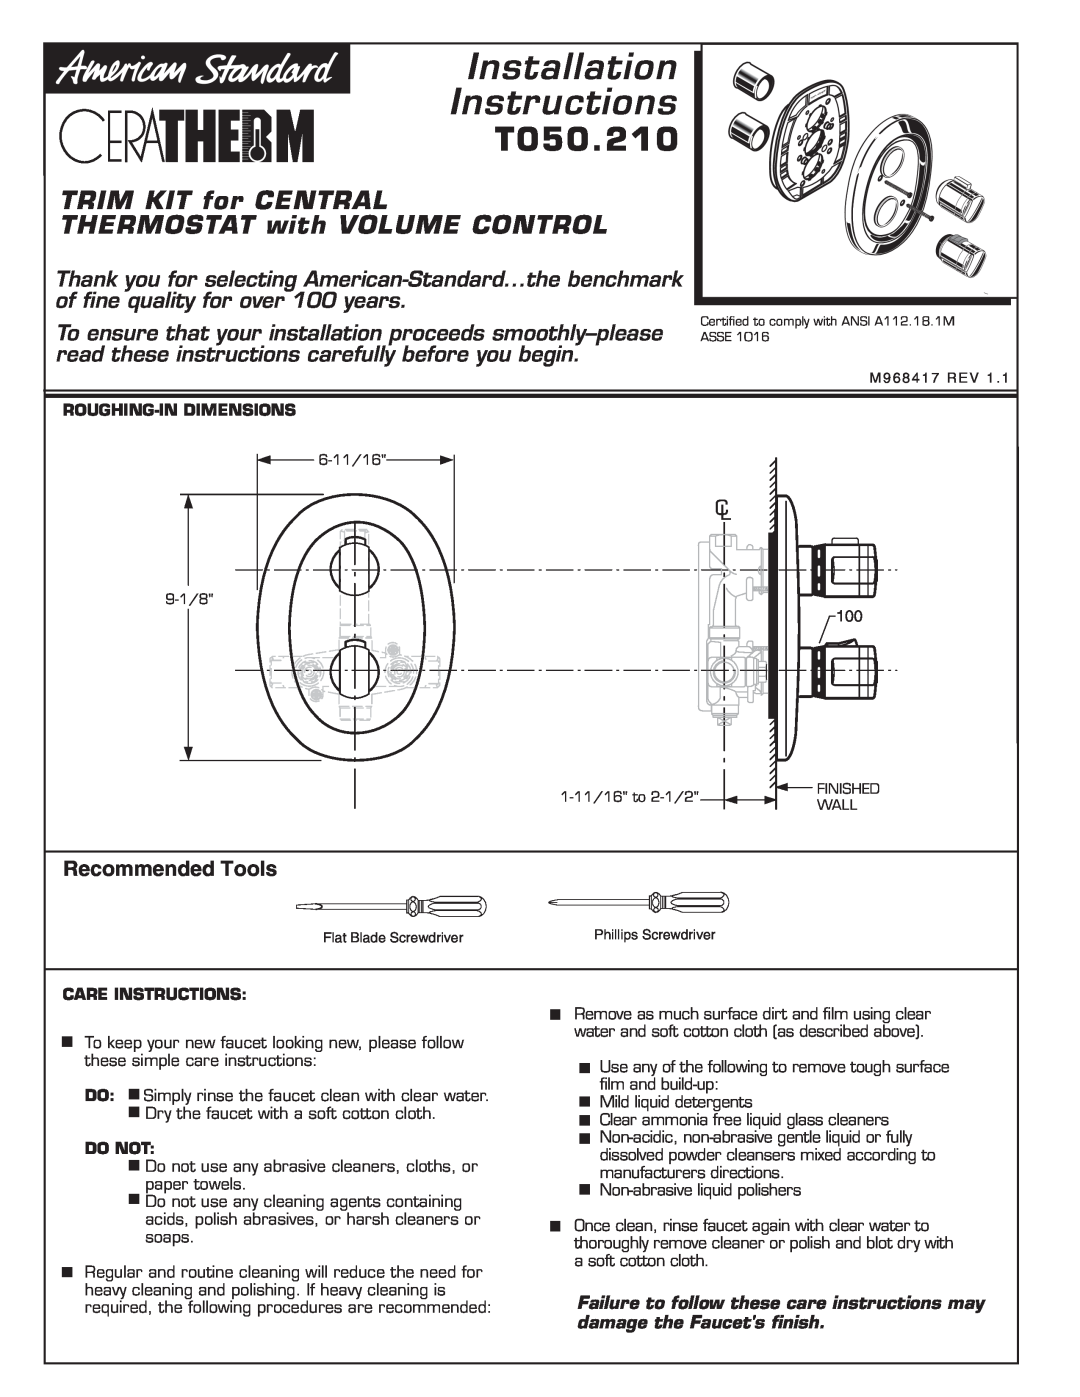 American Standard T050.210 installation instructions Installation Instructions, Recommended Tools 